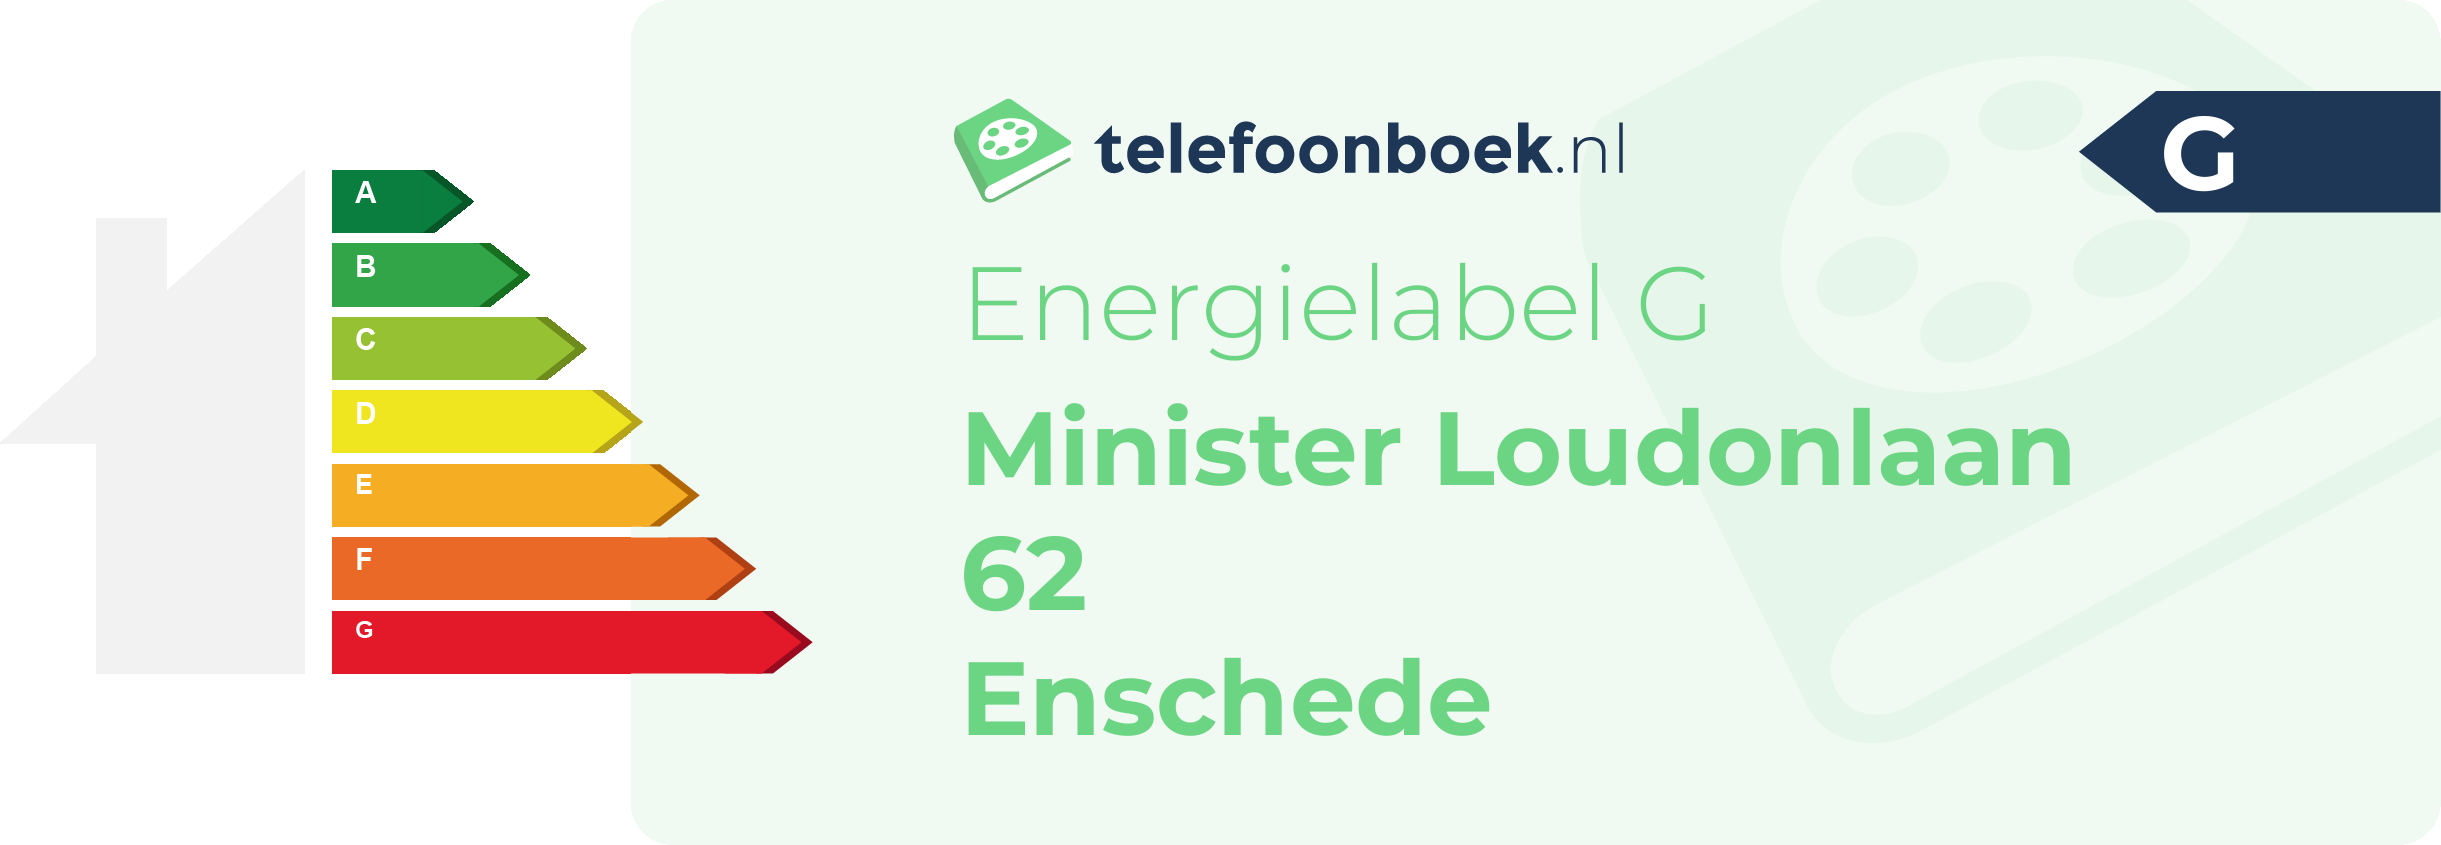 Energielabel Minister Loudonlaan 62 Enschede